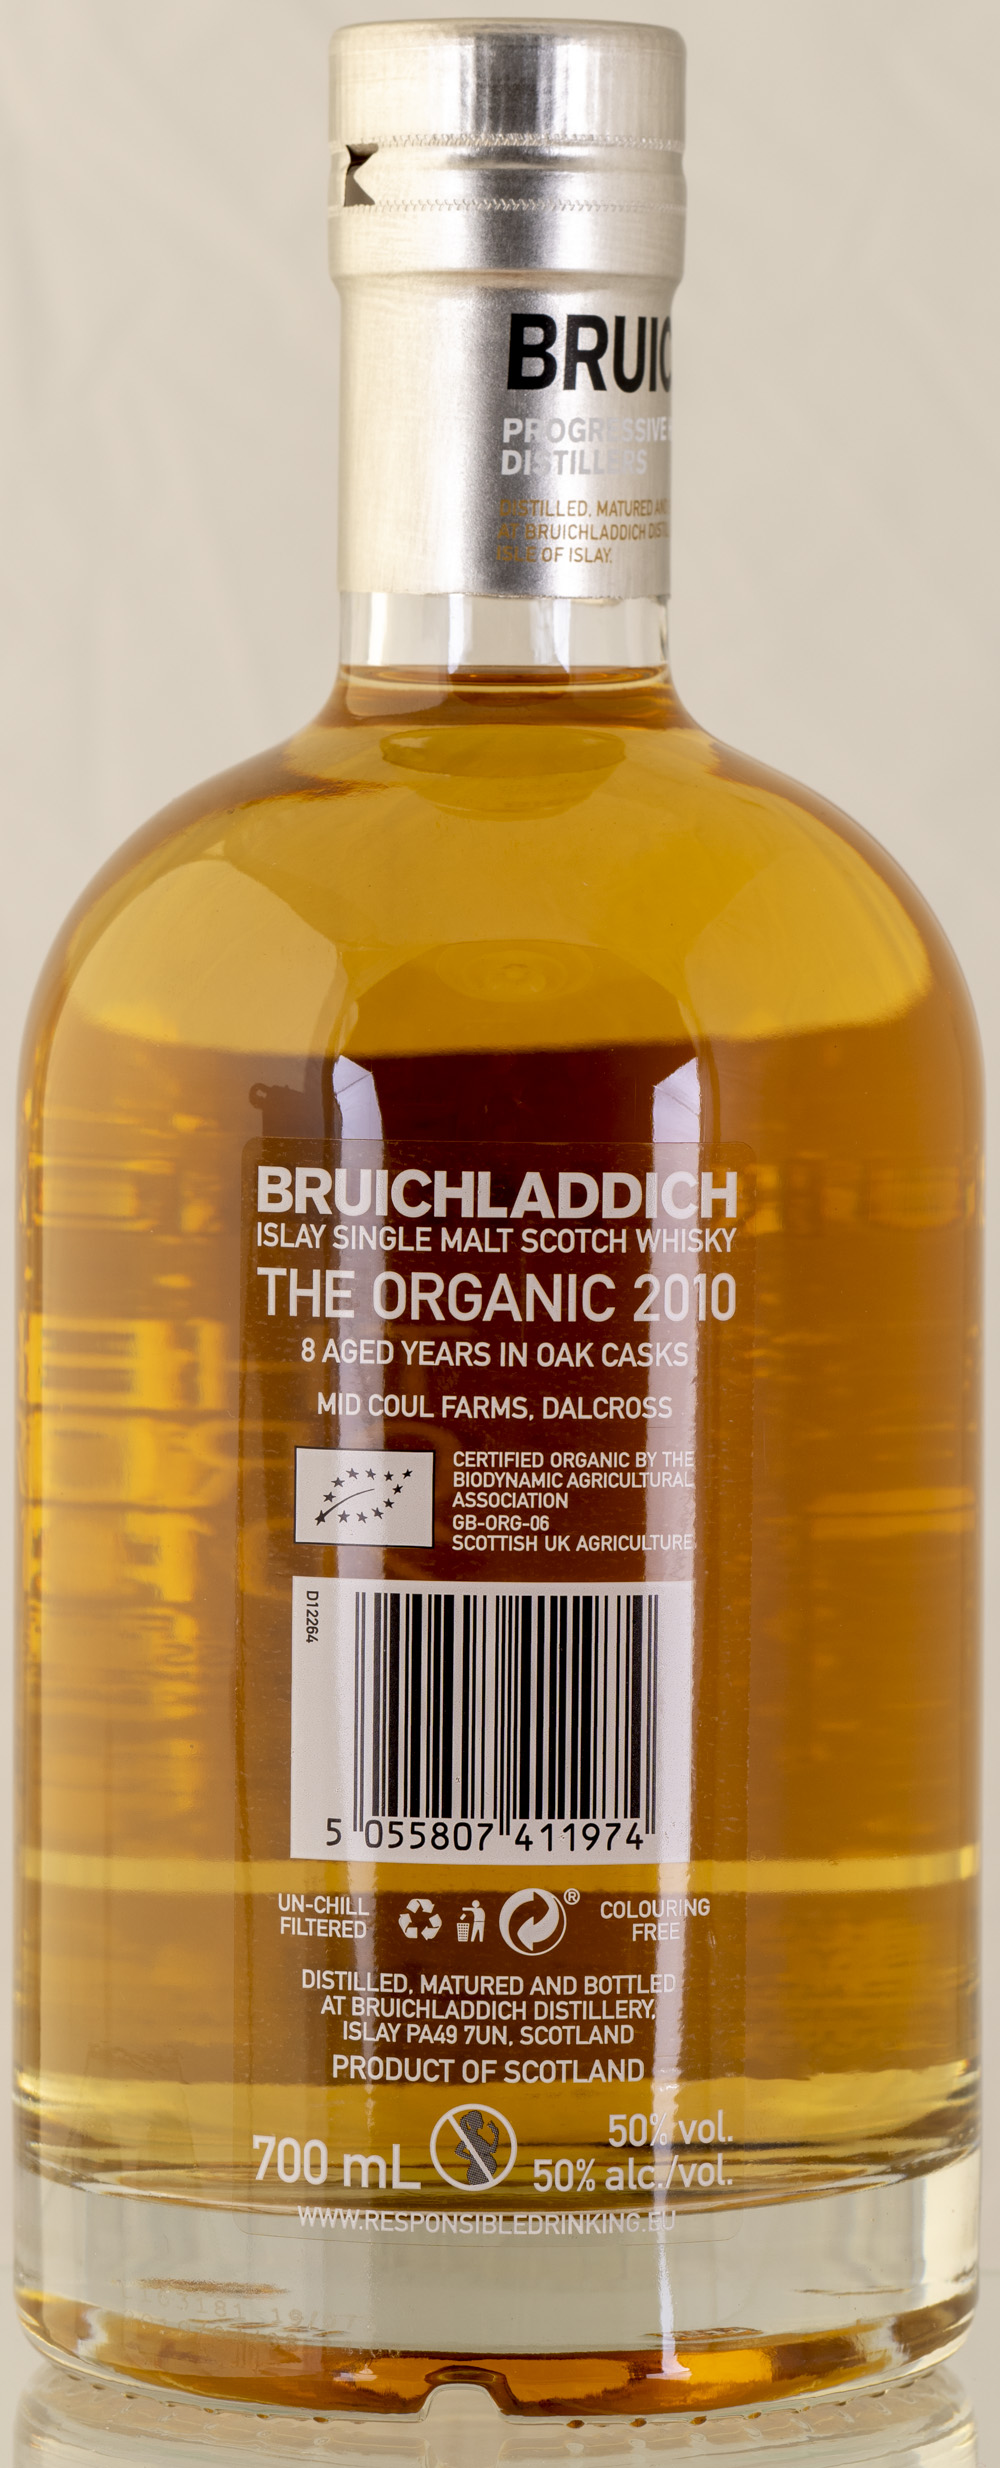 Billede: PHC_2289 - Bruichladdich the Organic 2010 Mid Coul Farms - bottle back.jpg